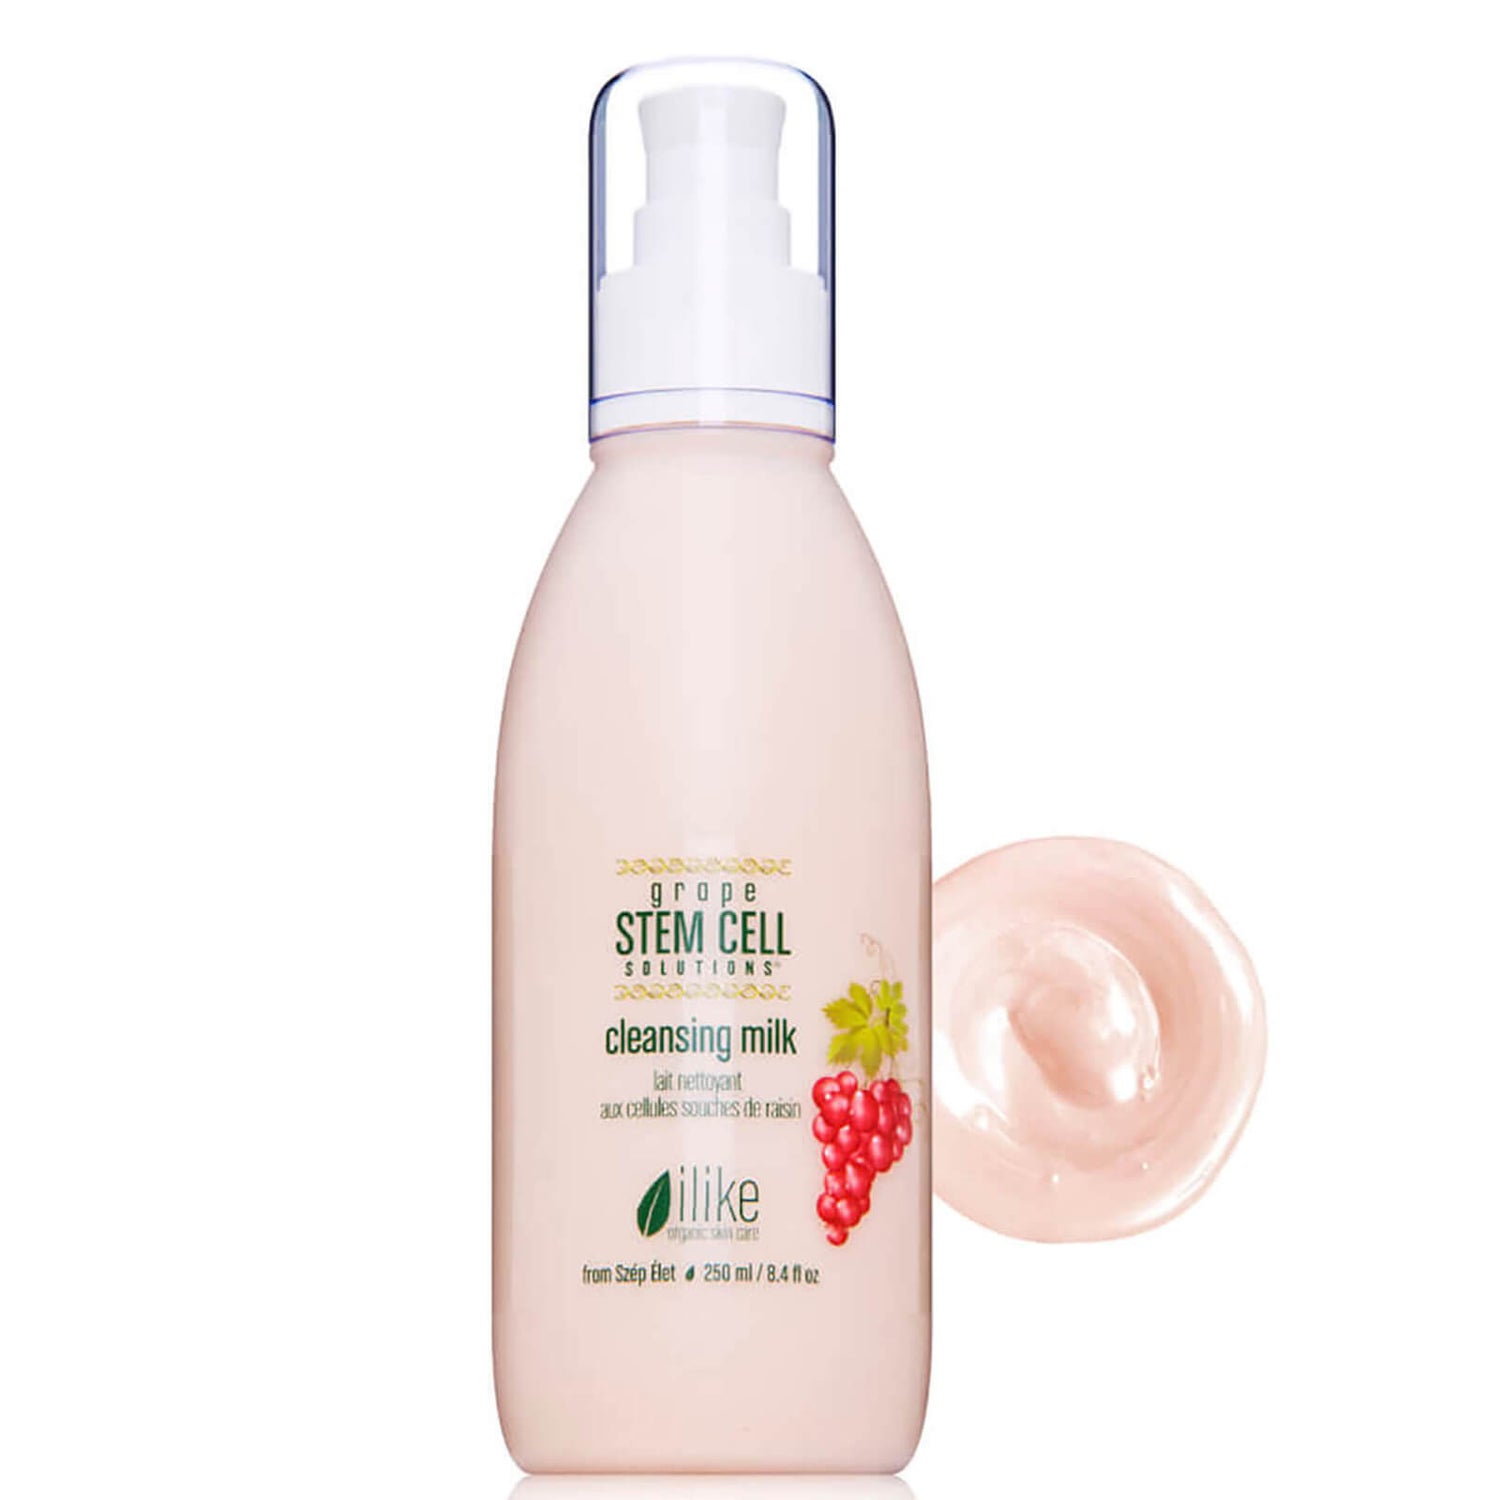 ilike organic skin care Grape Stem Cell Solutions Cleansing Milk (6.8 fl. oz.)